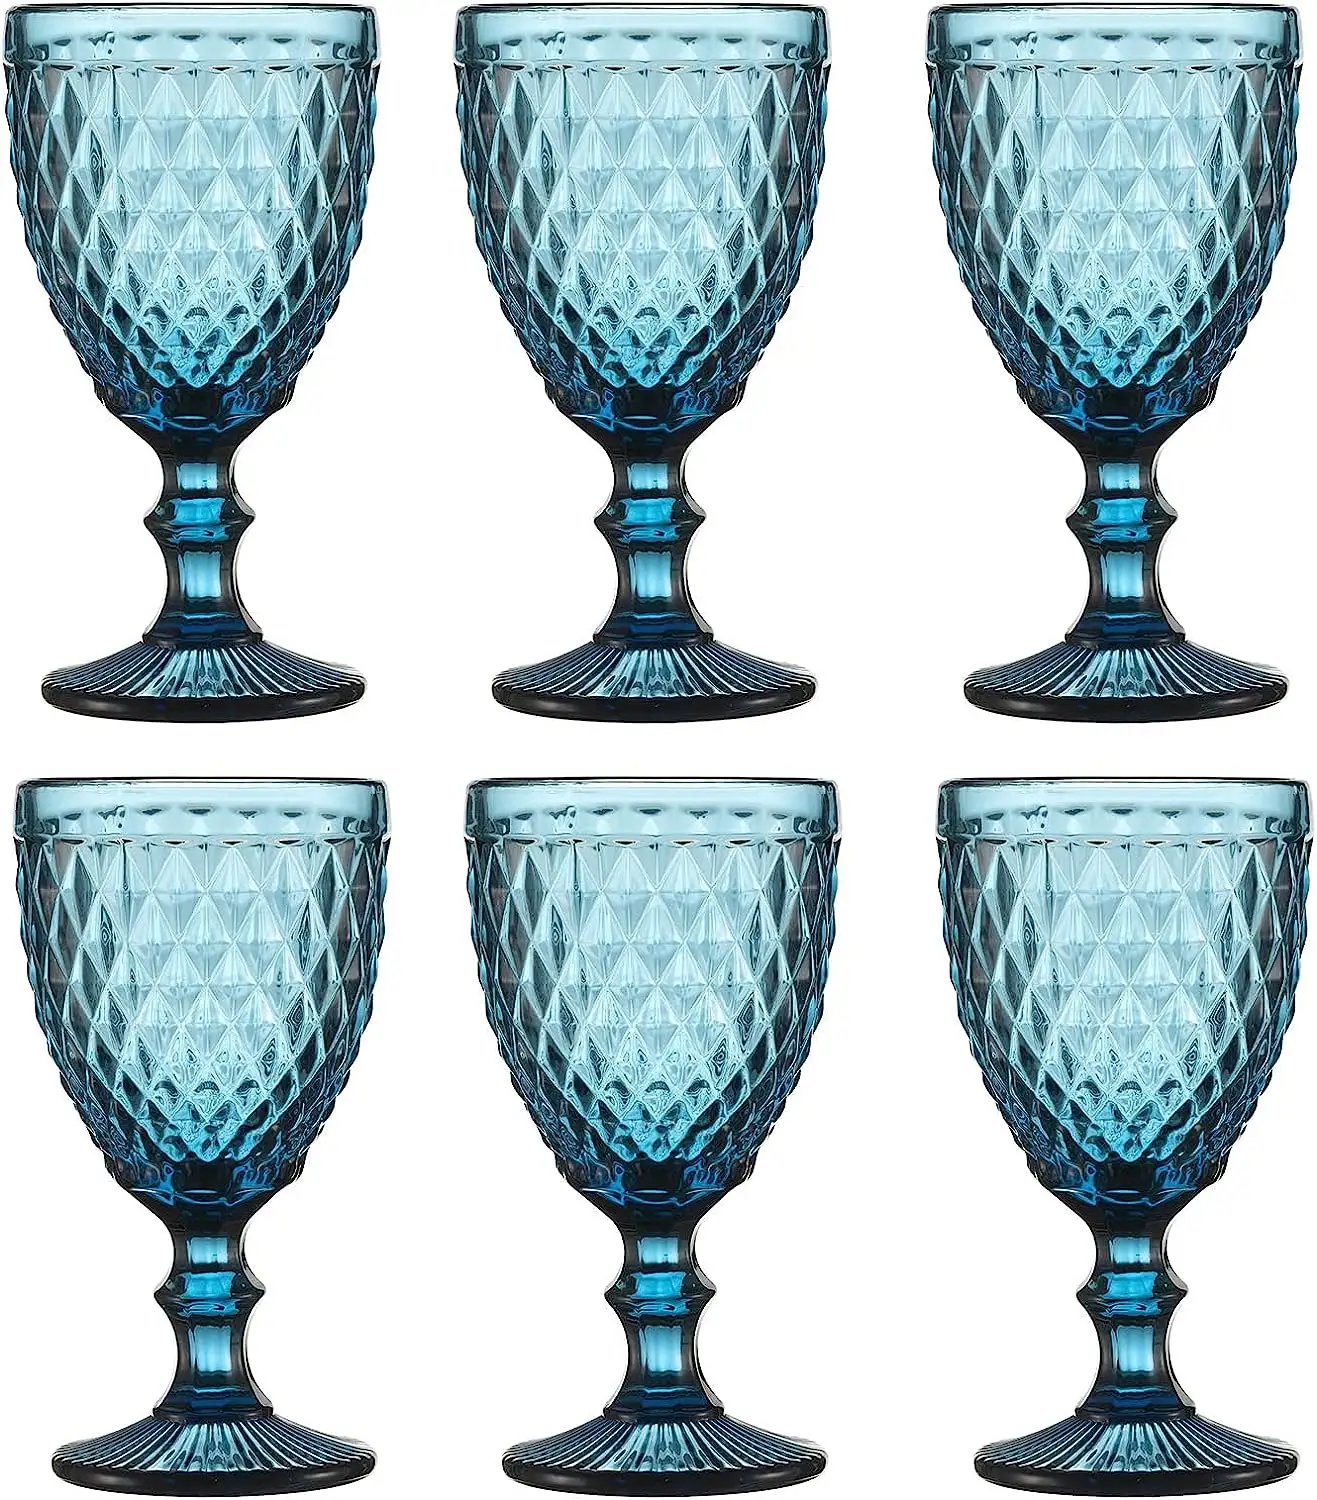 Peralatan minum Promosi pola timbul unik barang pecah belah tinggi bening Gelas pesta pernikahan Bar cangkir minum berlian biru